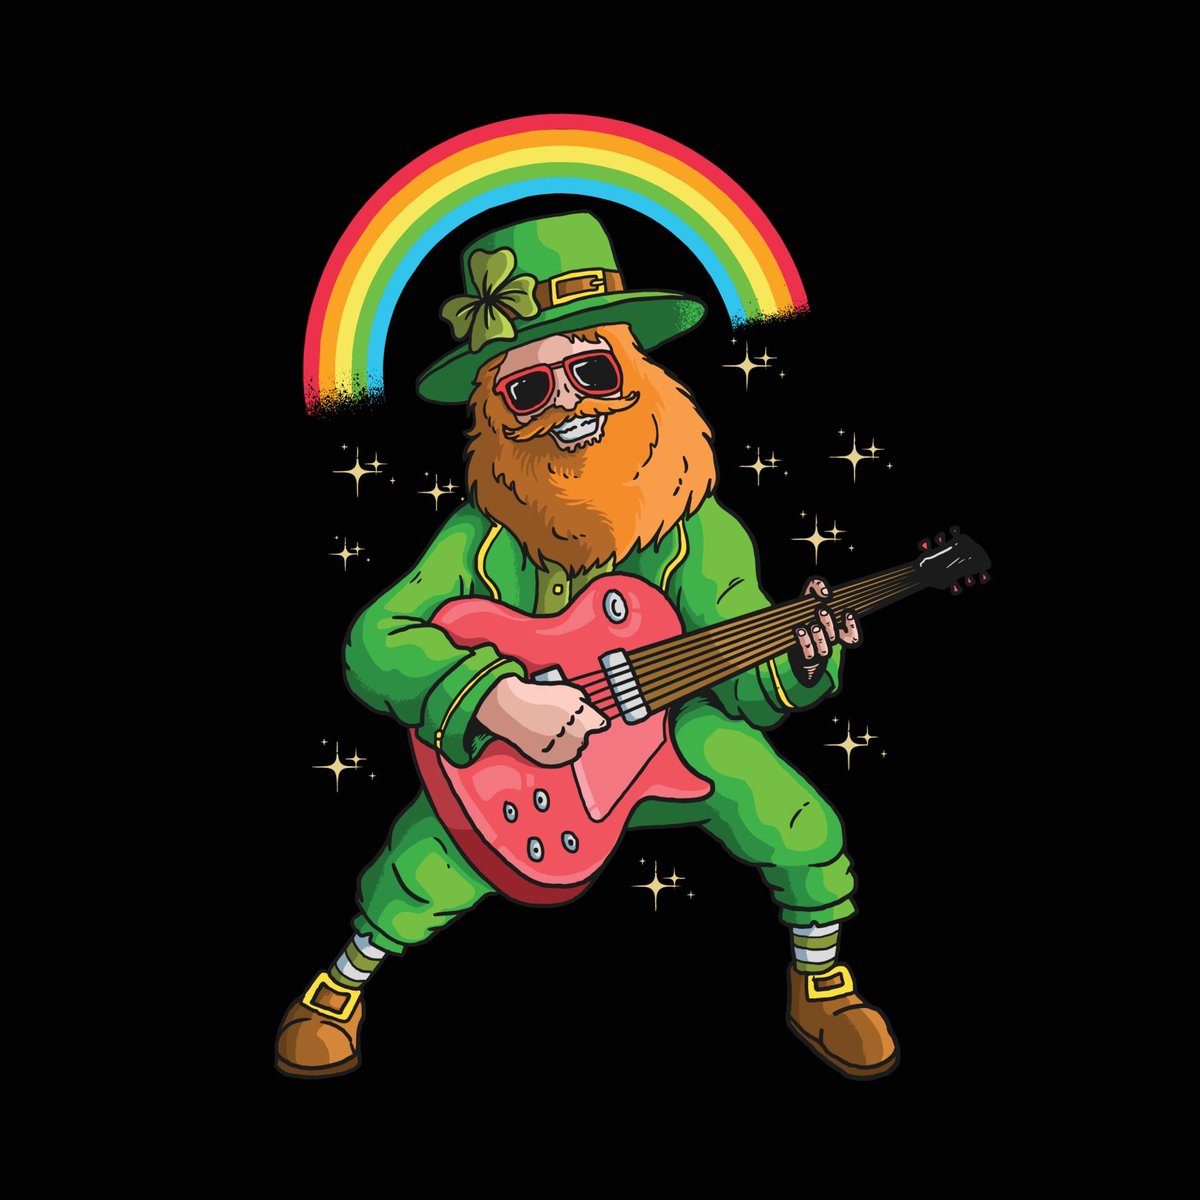 Happy St. Patrick's Day! 🍀 #sunsetstrip #sunsetboulevard #hollywood #rocknroll #rockmusic #rockhistory #losangeles #rockangeles #LA #music #StPatricksDay #StPaddysDay #LuckoftheIrish #Shamrocks #PotOfGold #GoodLuck